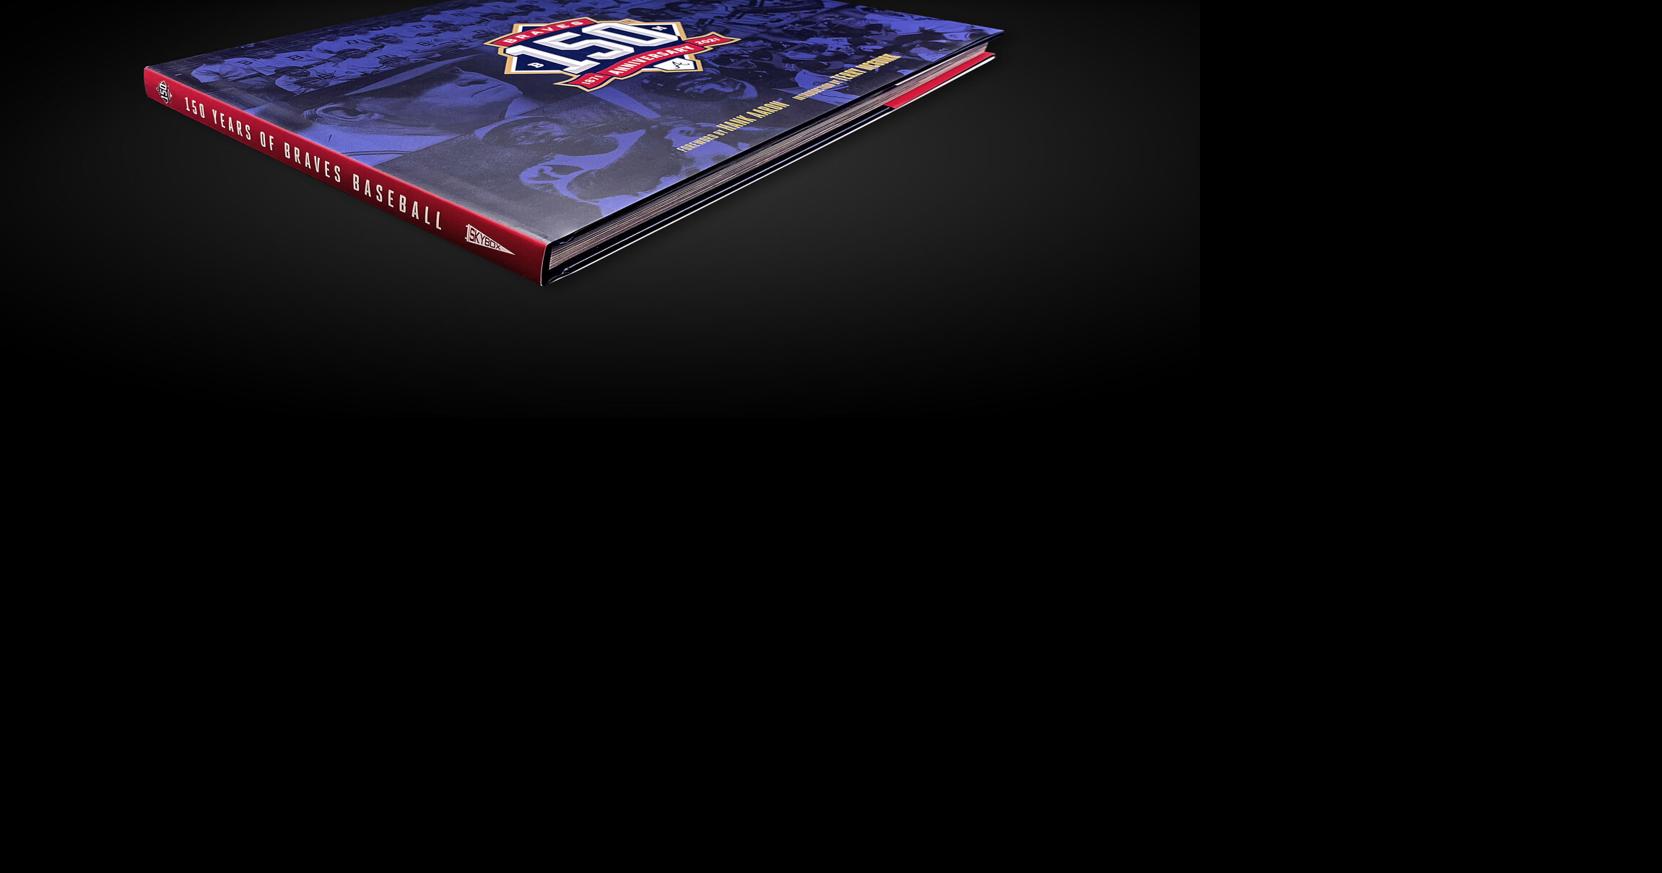 Atlanta Braves release commemorative book, 150 Years of Braves